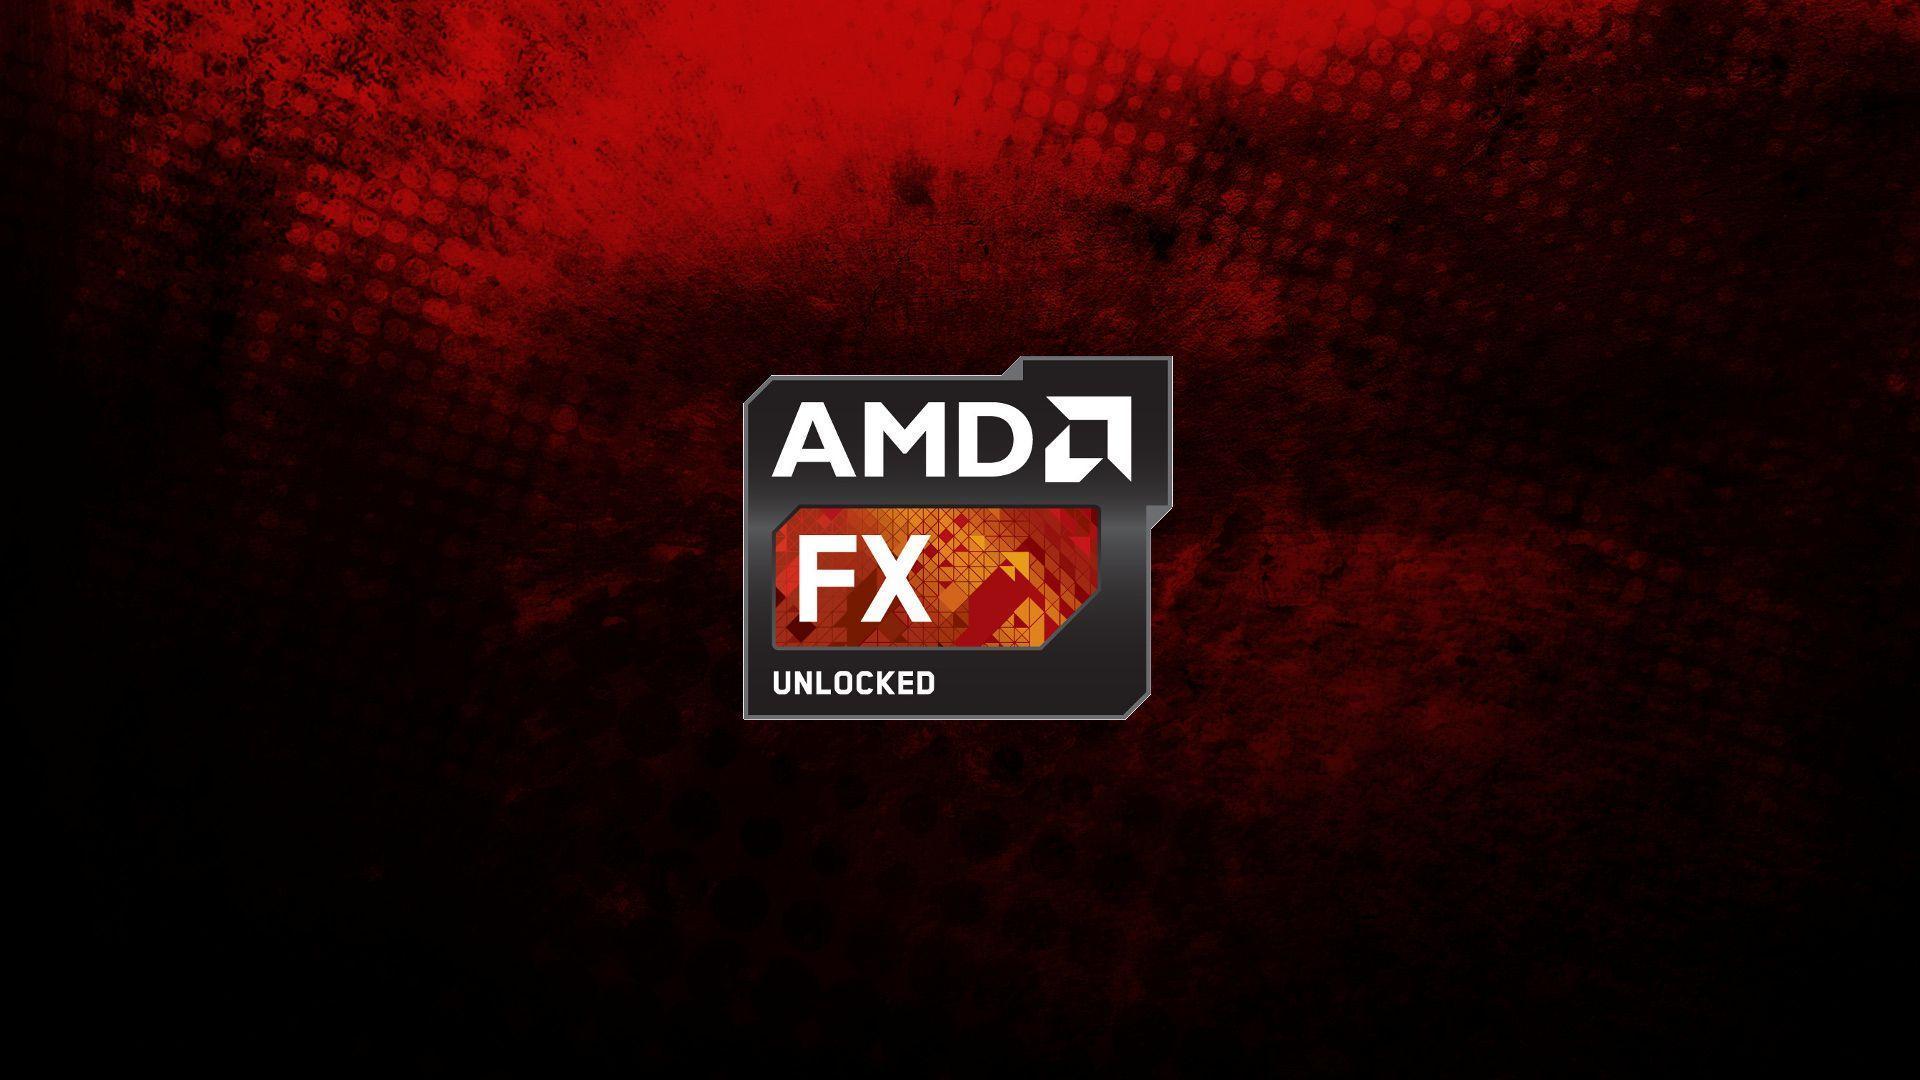 AMD FX Wallpaper